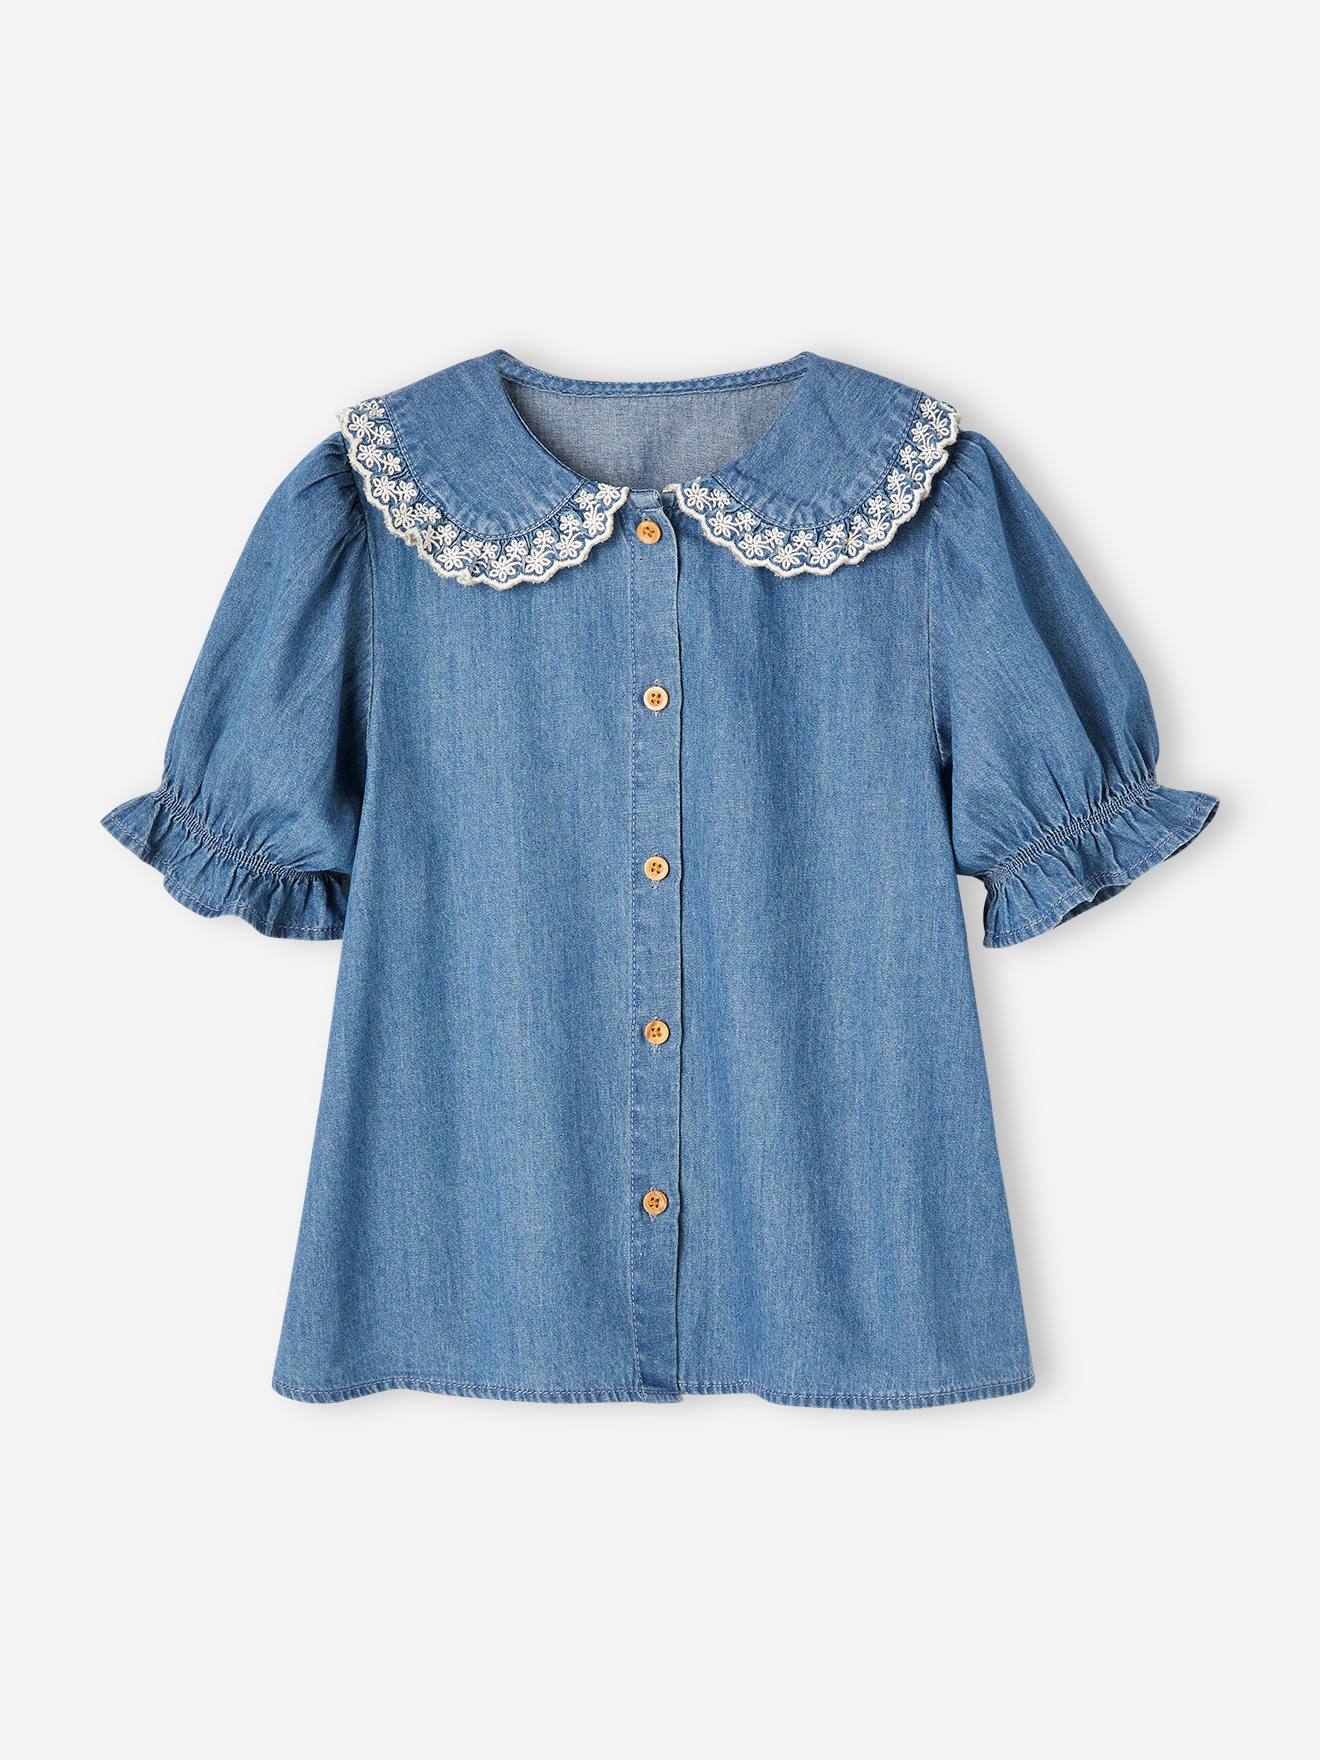 Womens Denim Shirt Jean Tops Mesh Splice Ruffle Stand Up Collar Button  Shirts | eBay